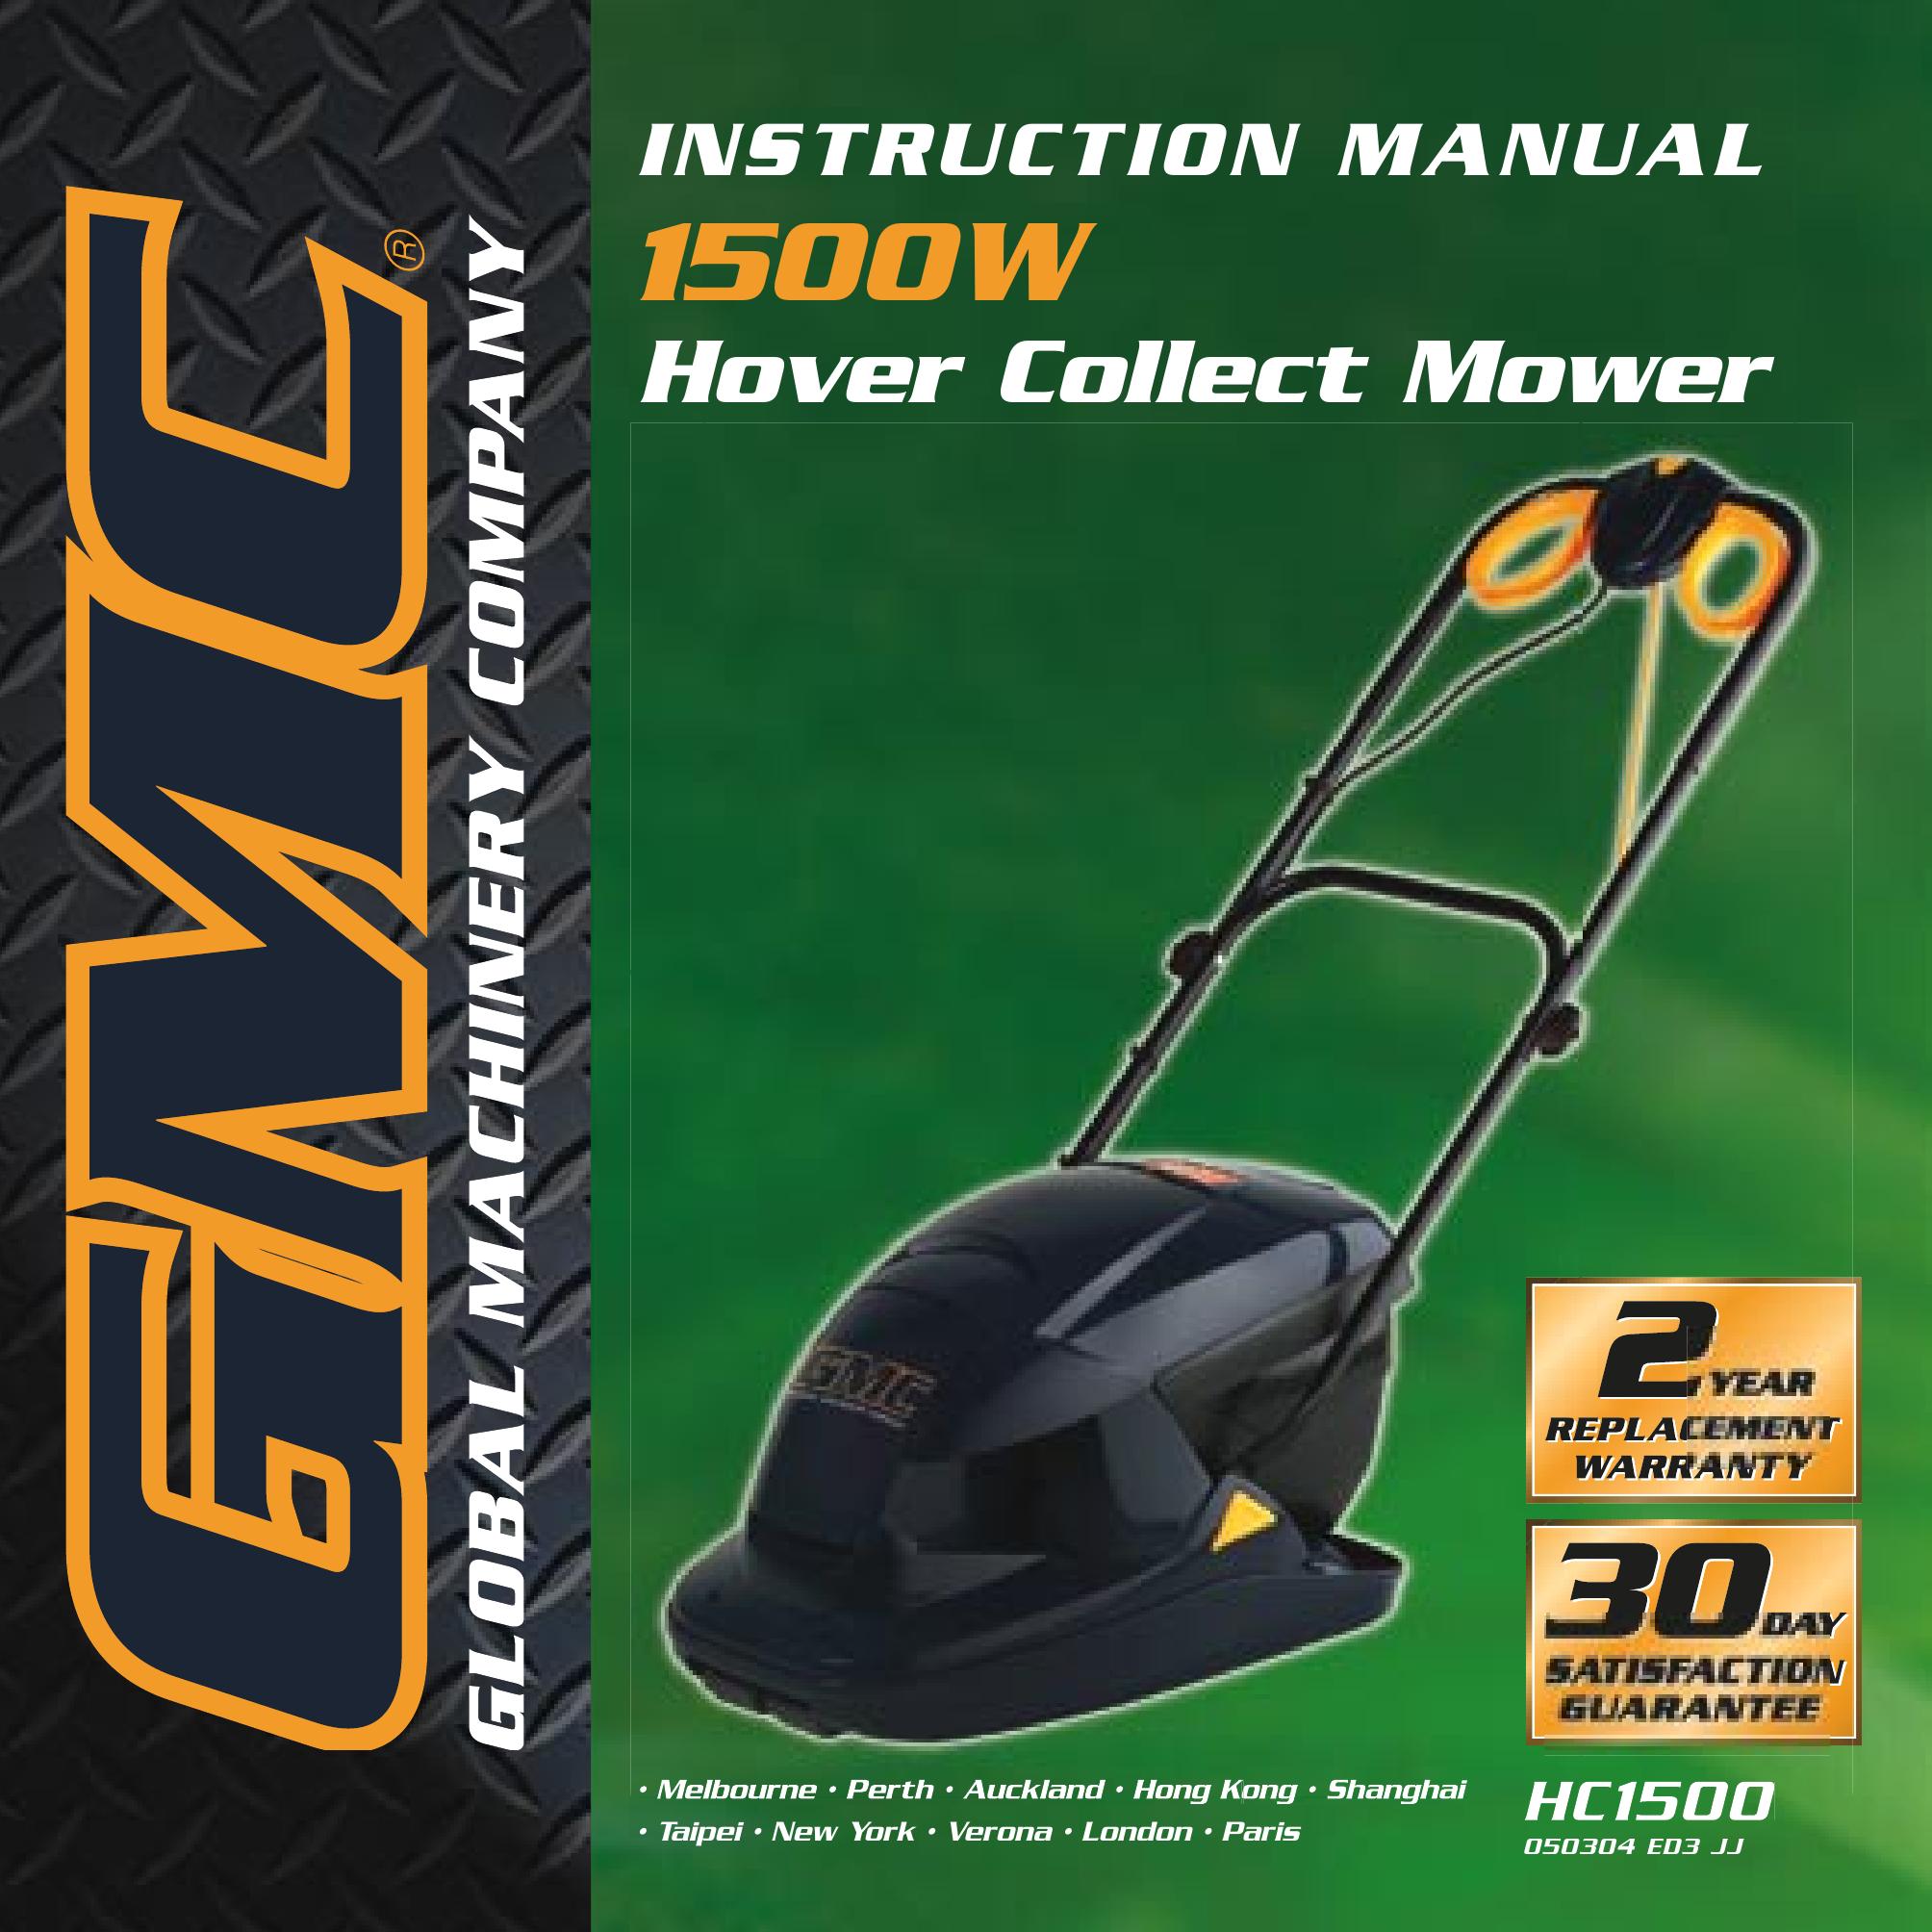 Global Machinery Company HC1500 Lawn Mower User Manual